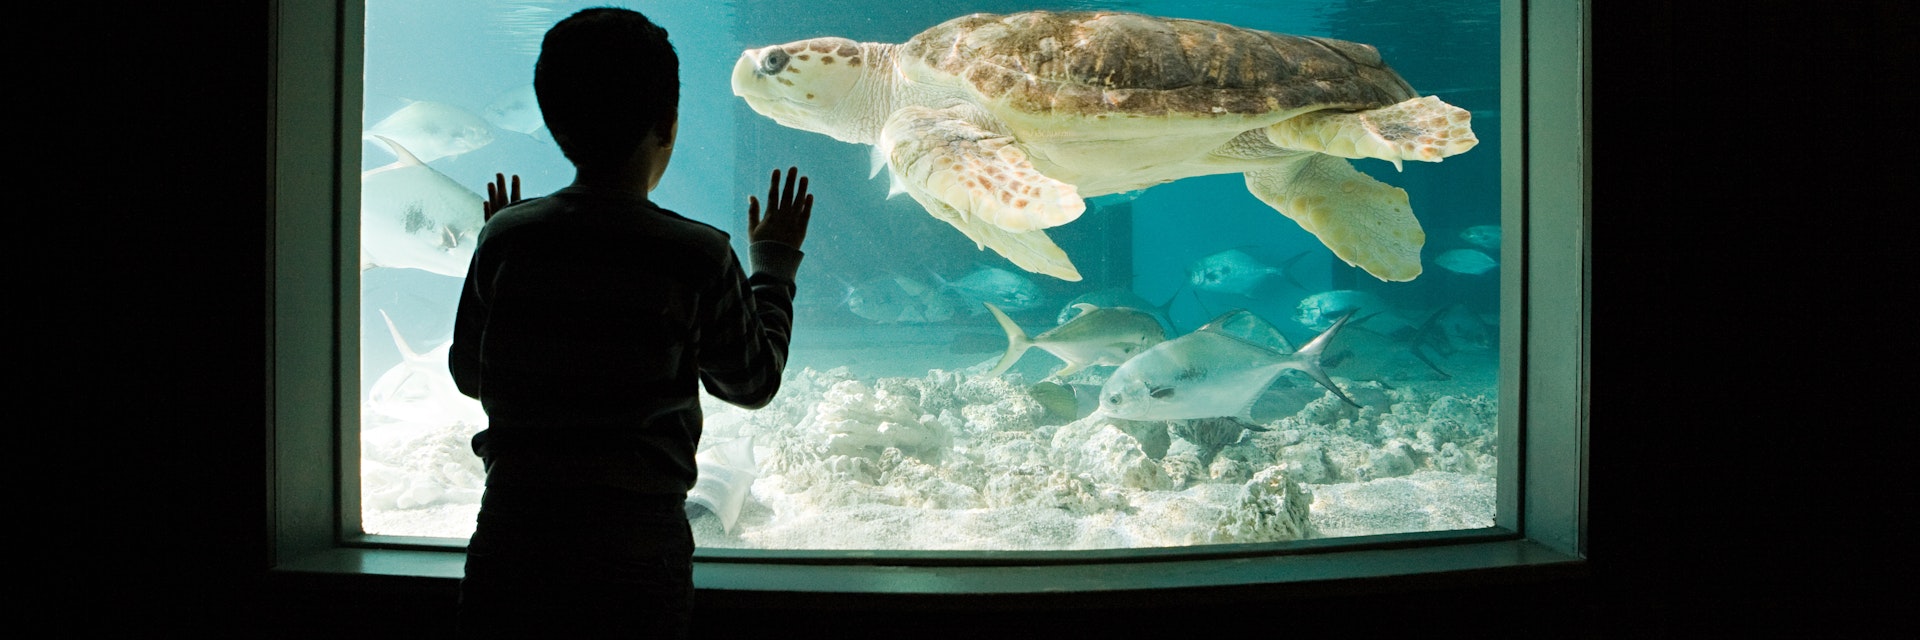 Boy watching sea turtle in aquarium